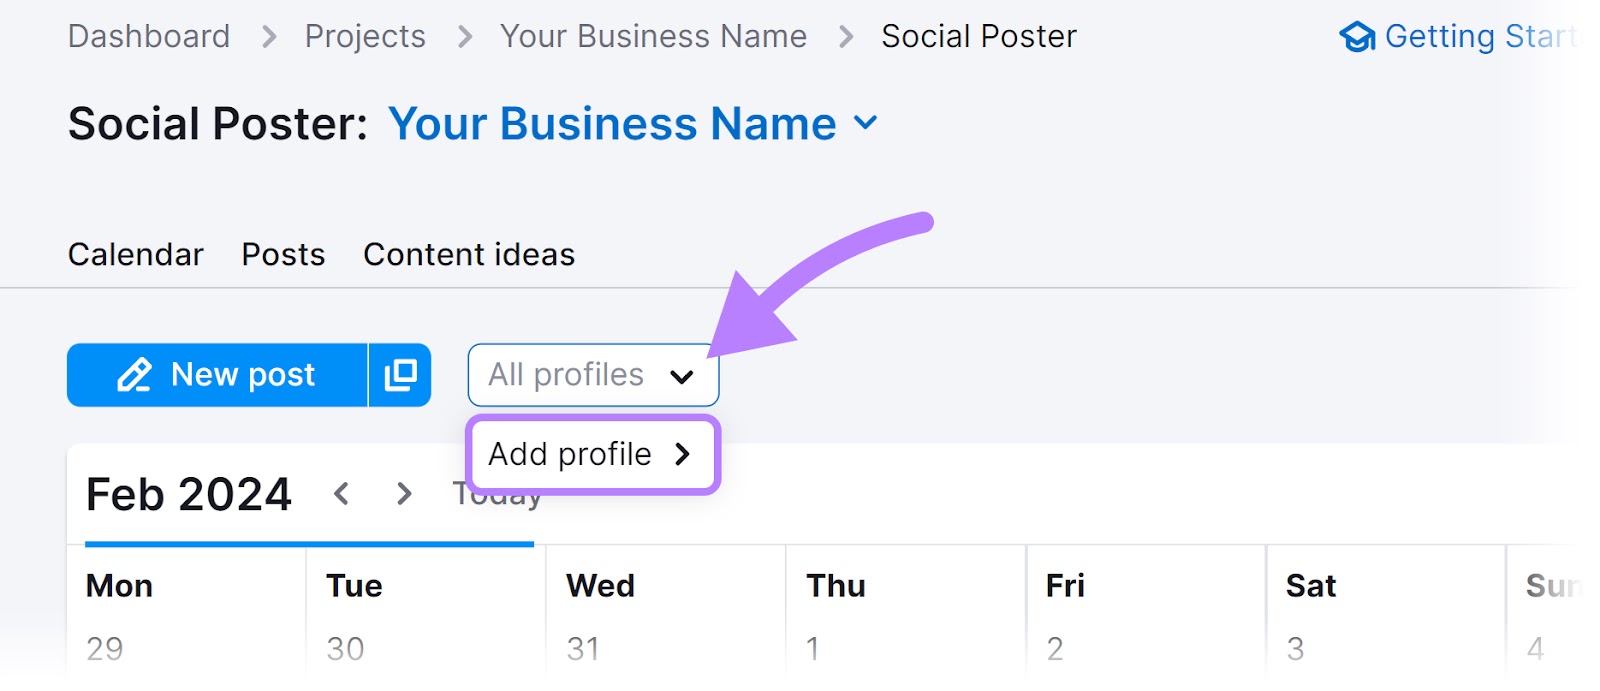 "Add profile" fastener  successful  Social Poster tool